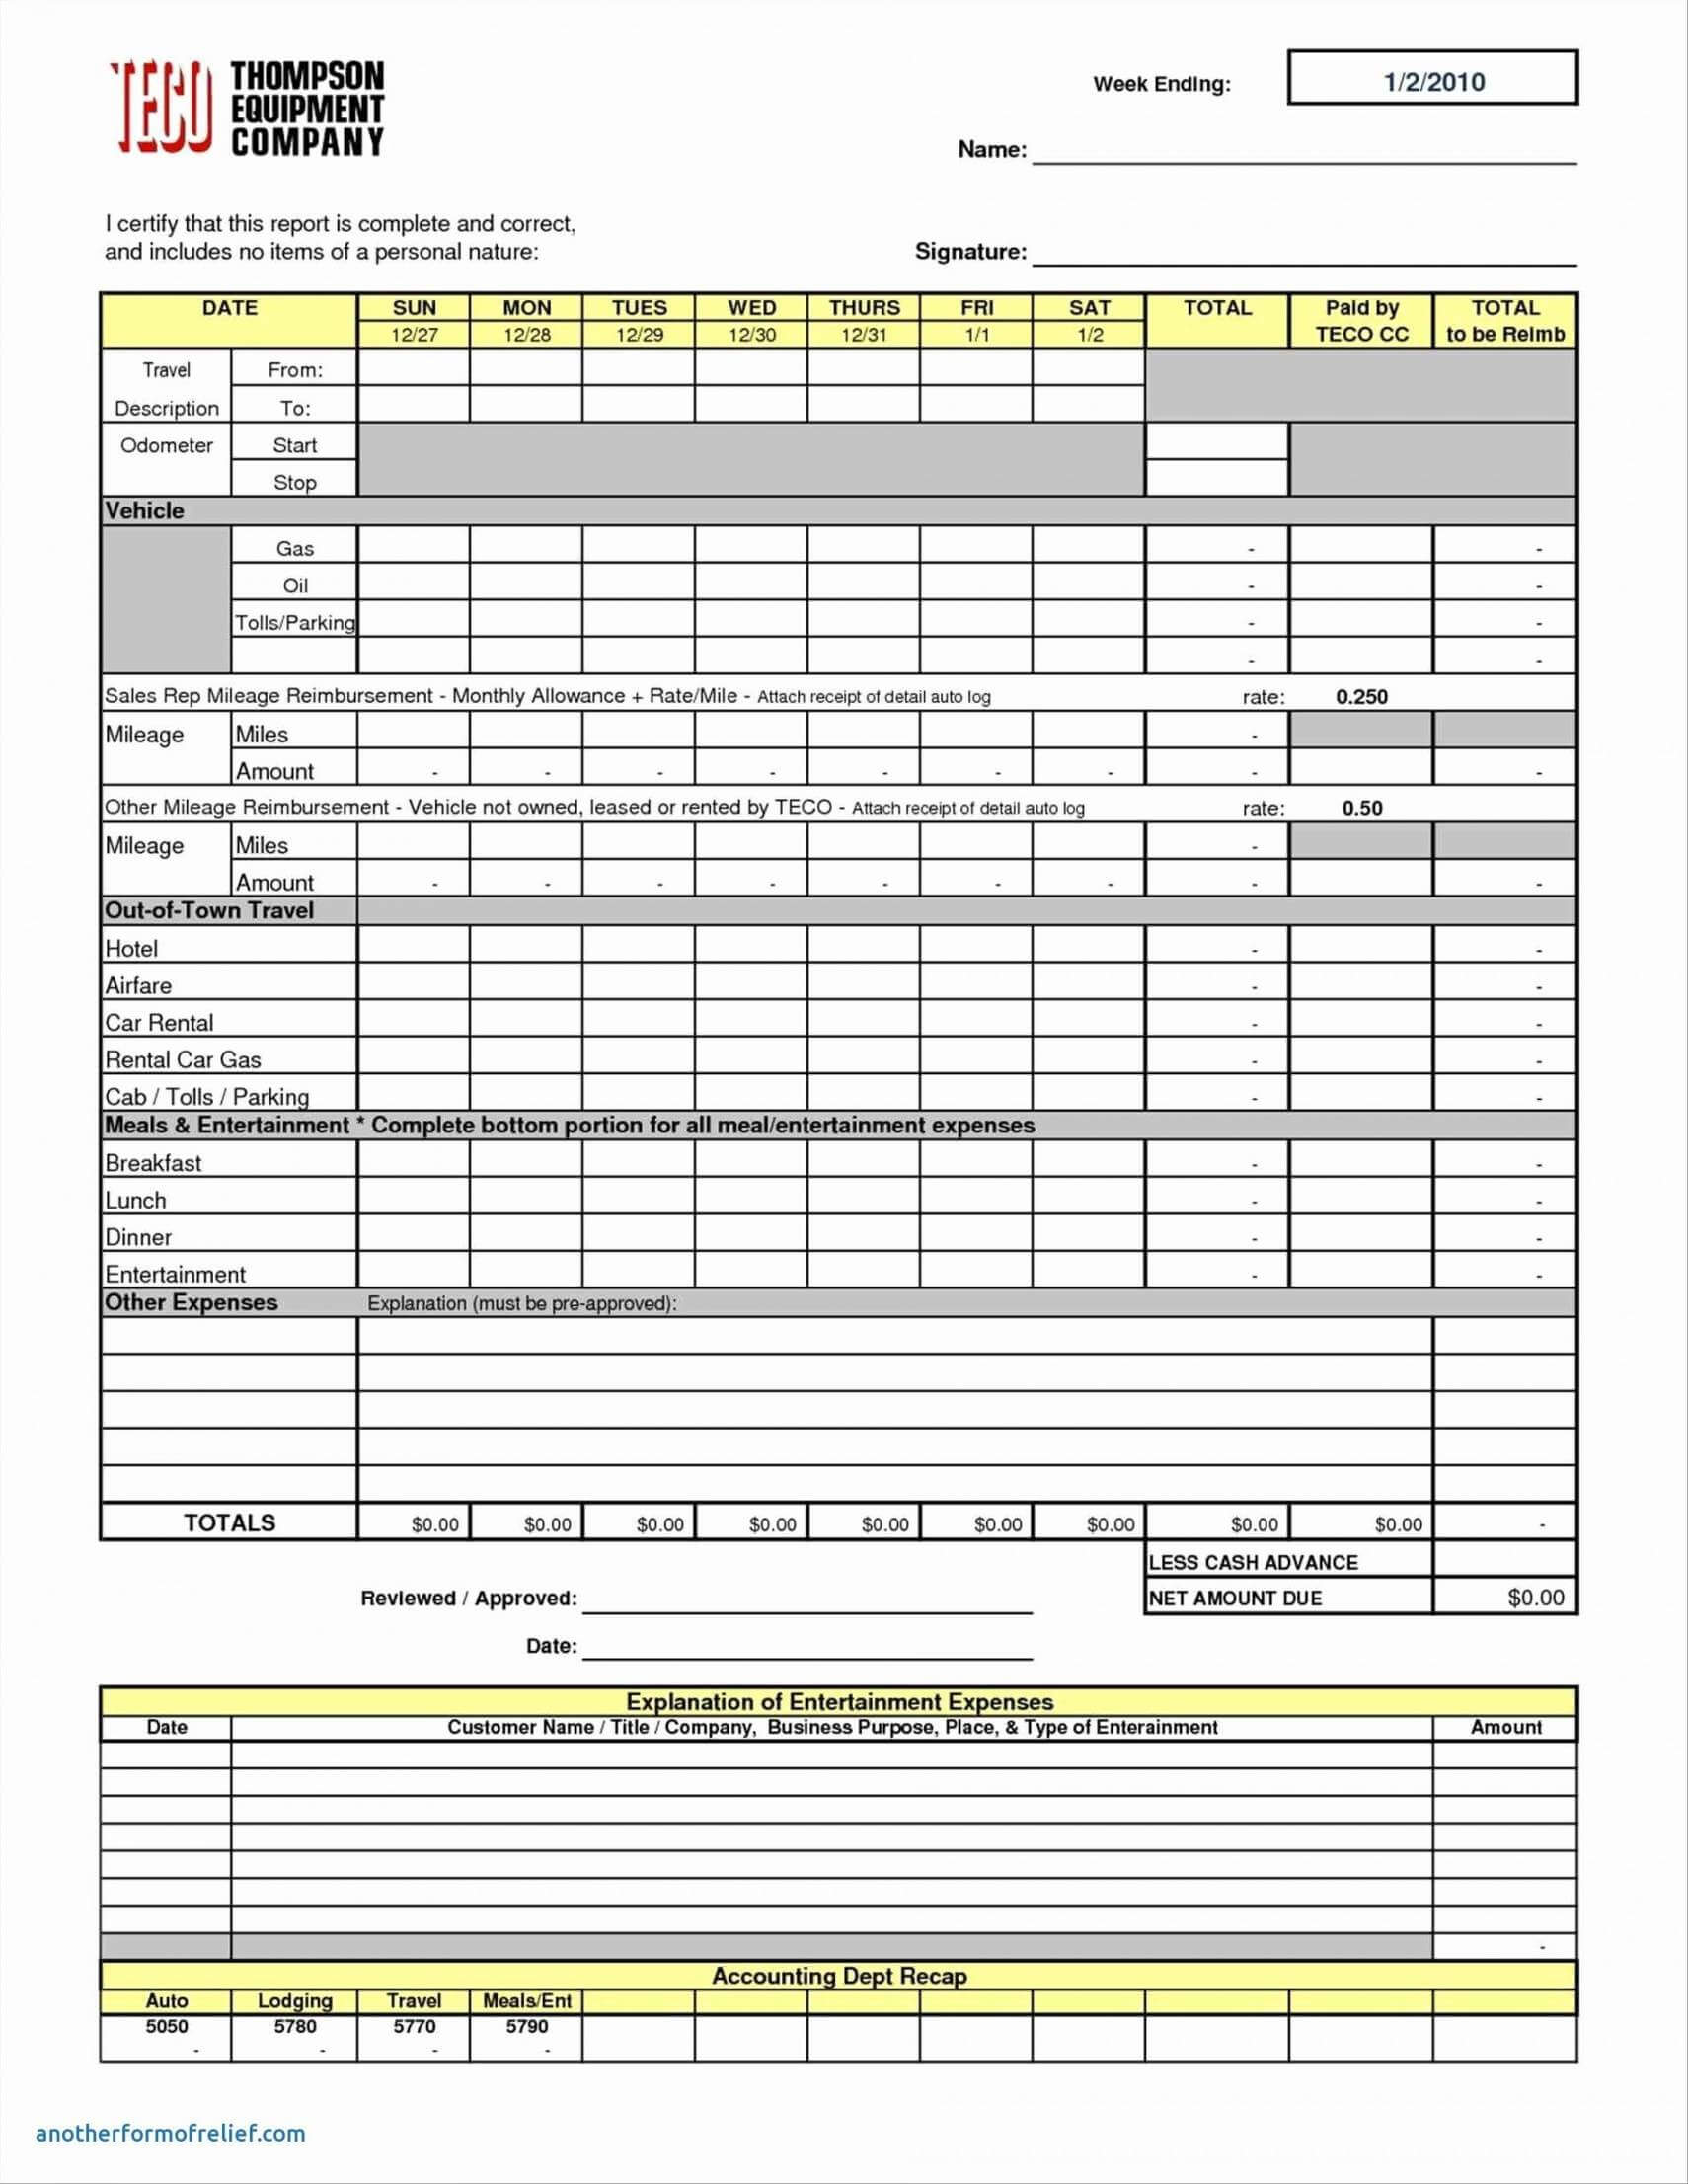 Sample Balance Sheet For Llc Glendale Community Document Regarding Air Balance Report Template